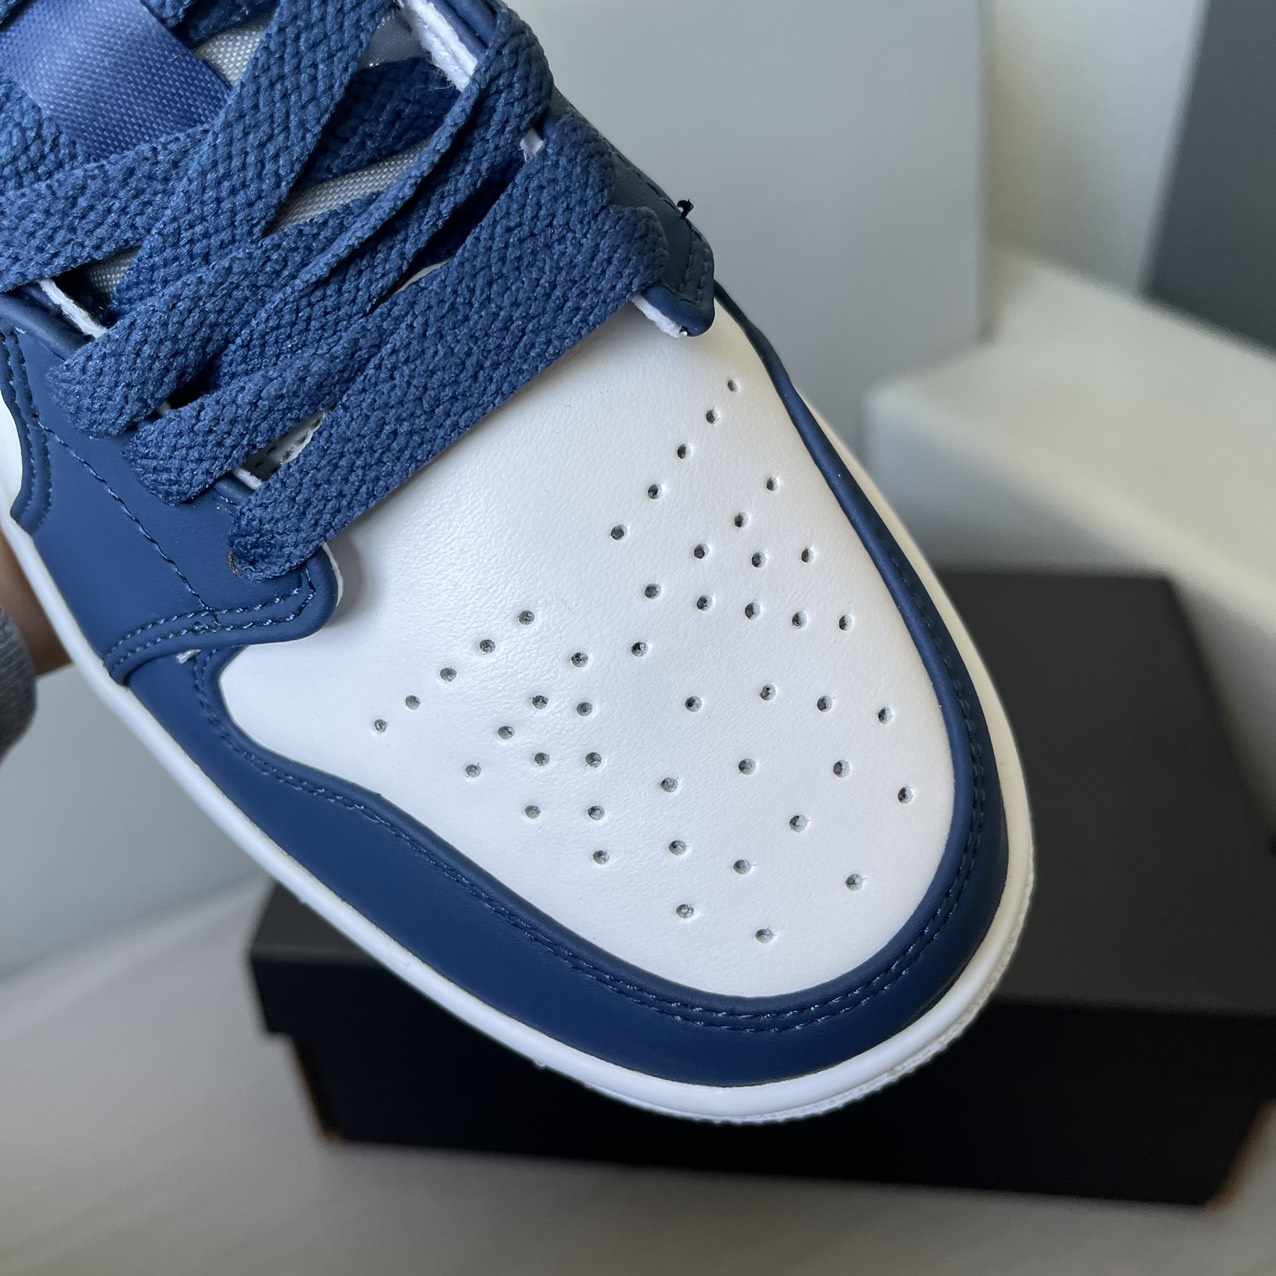 Nike Air Jordan 1 Low Blue Cement Like Auth